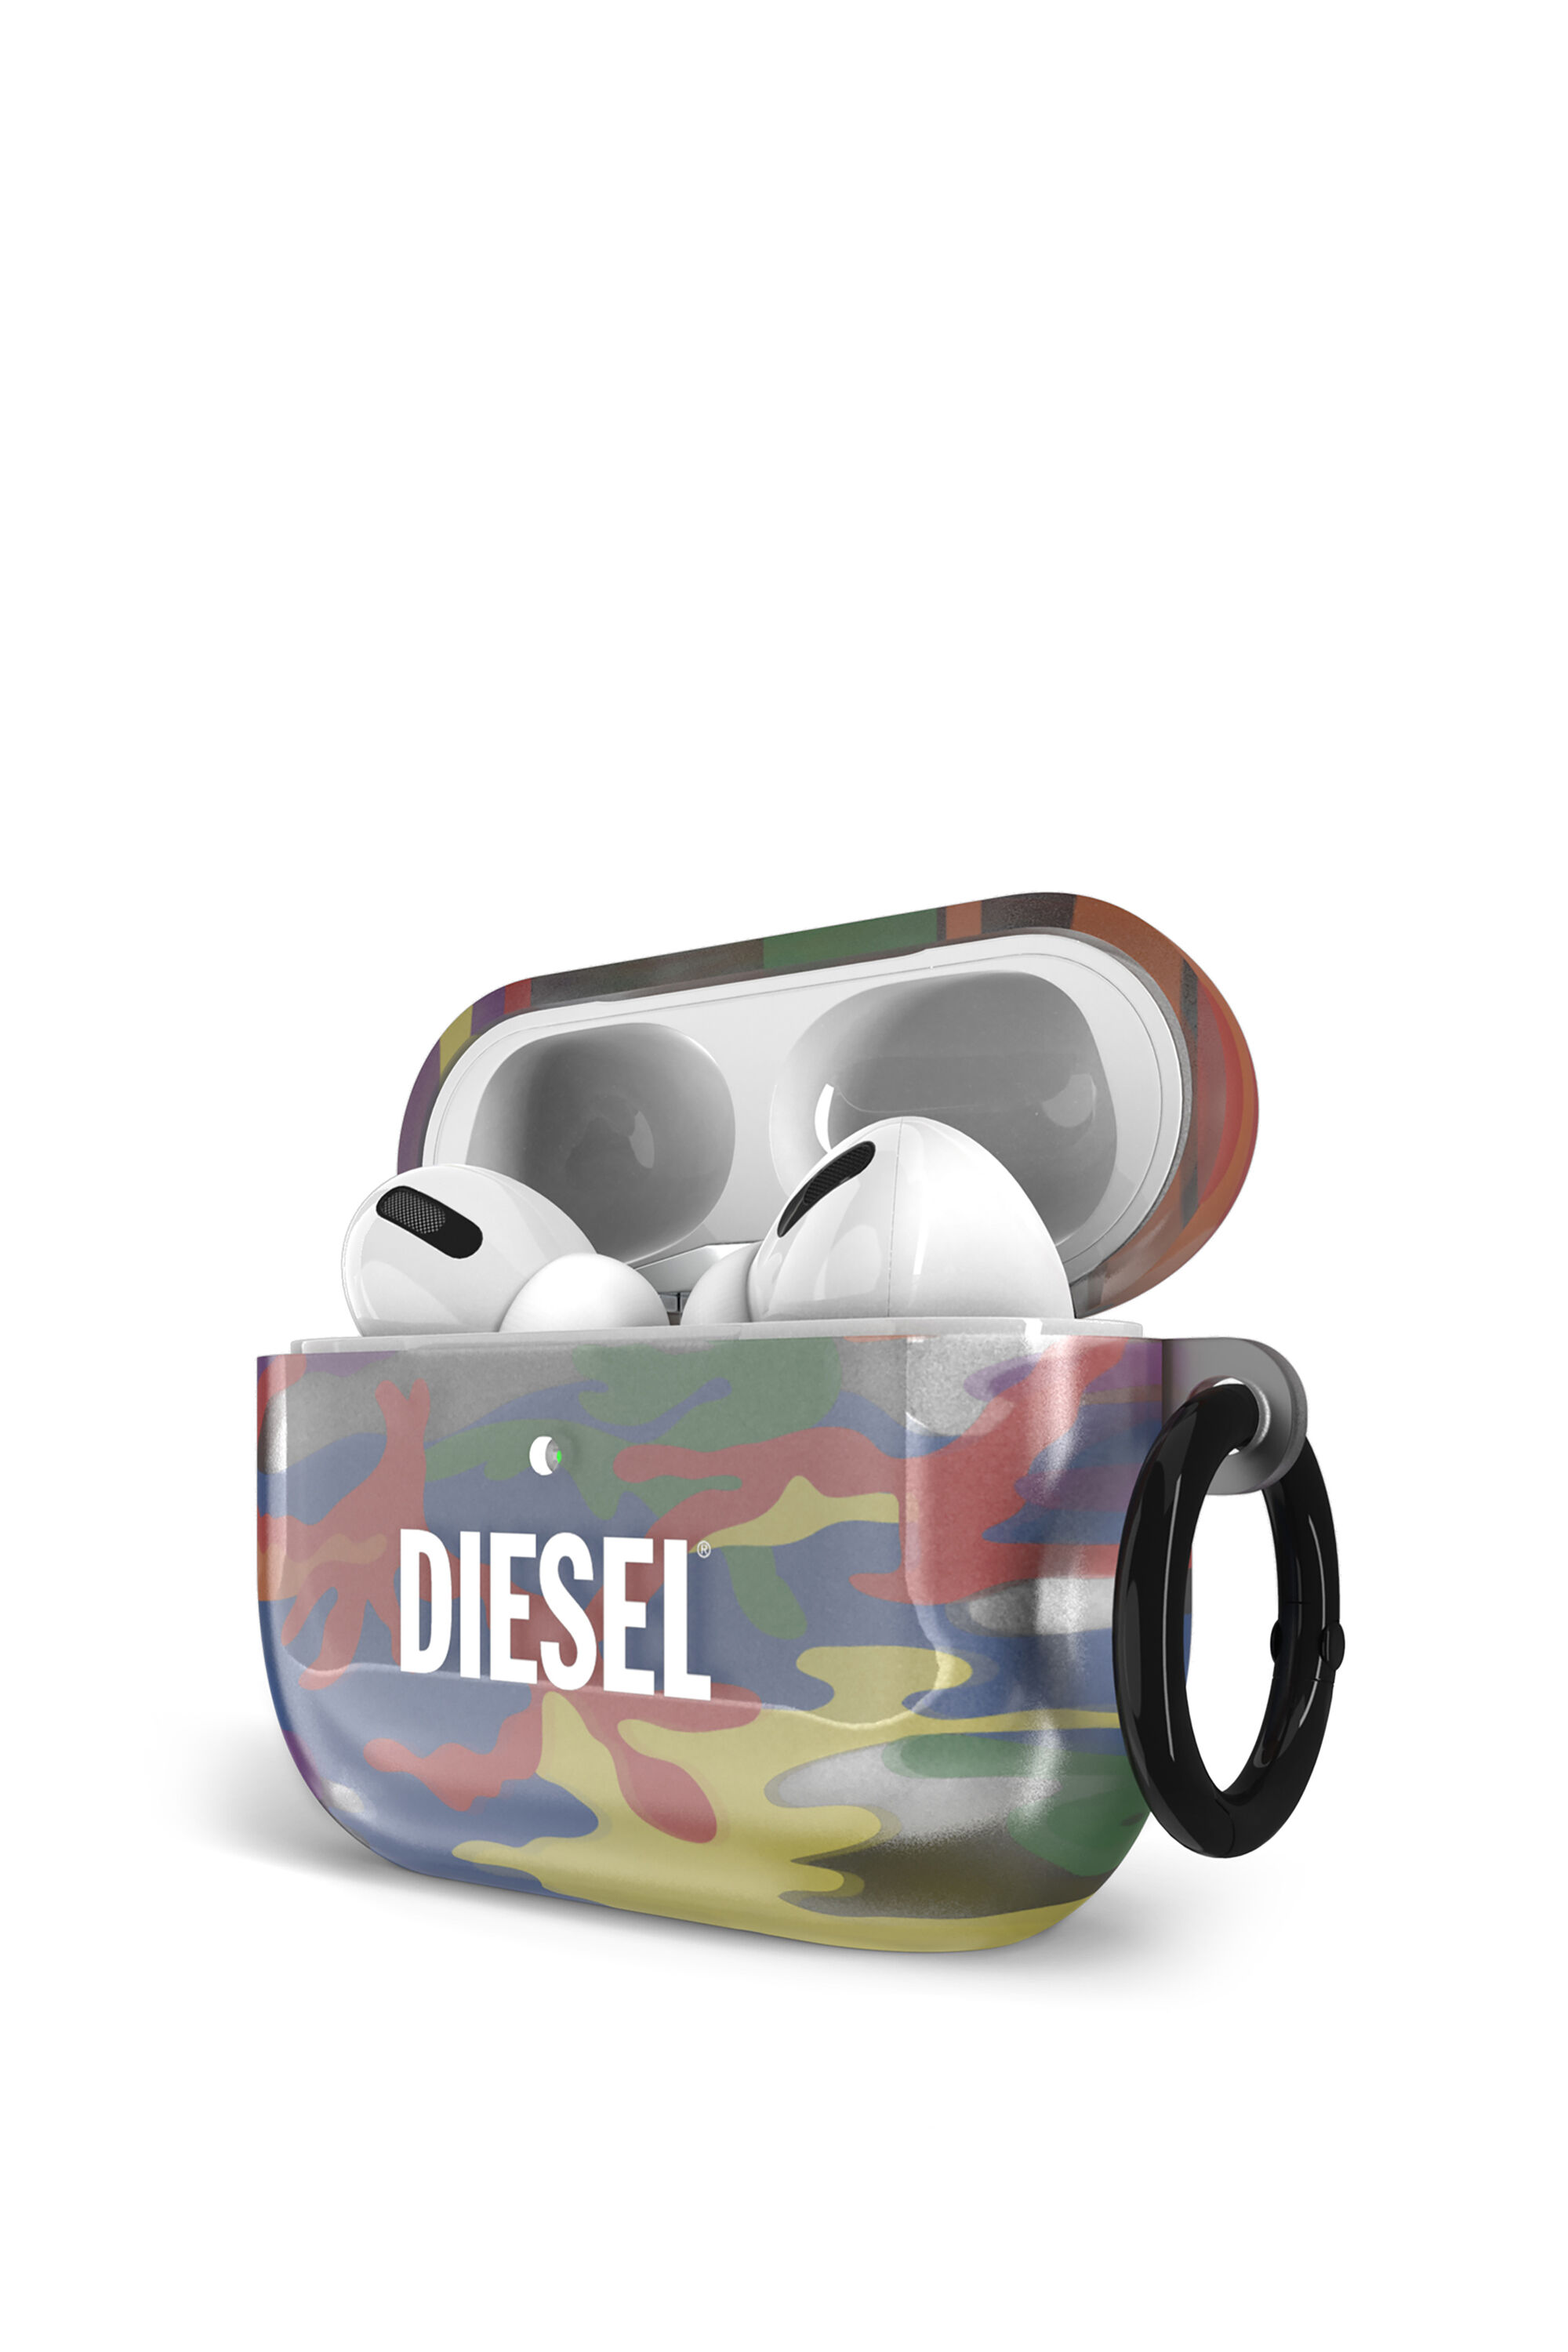 Diesel - 44344   AIRPOD CASE, Multicolore - Image 3